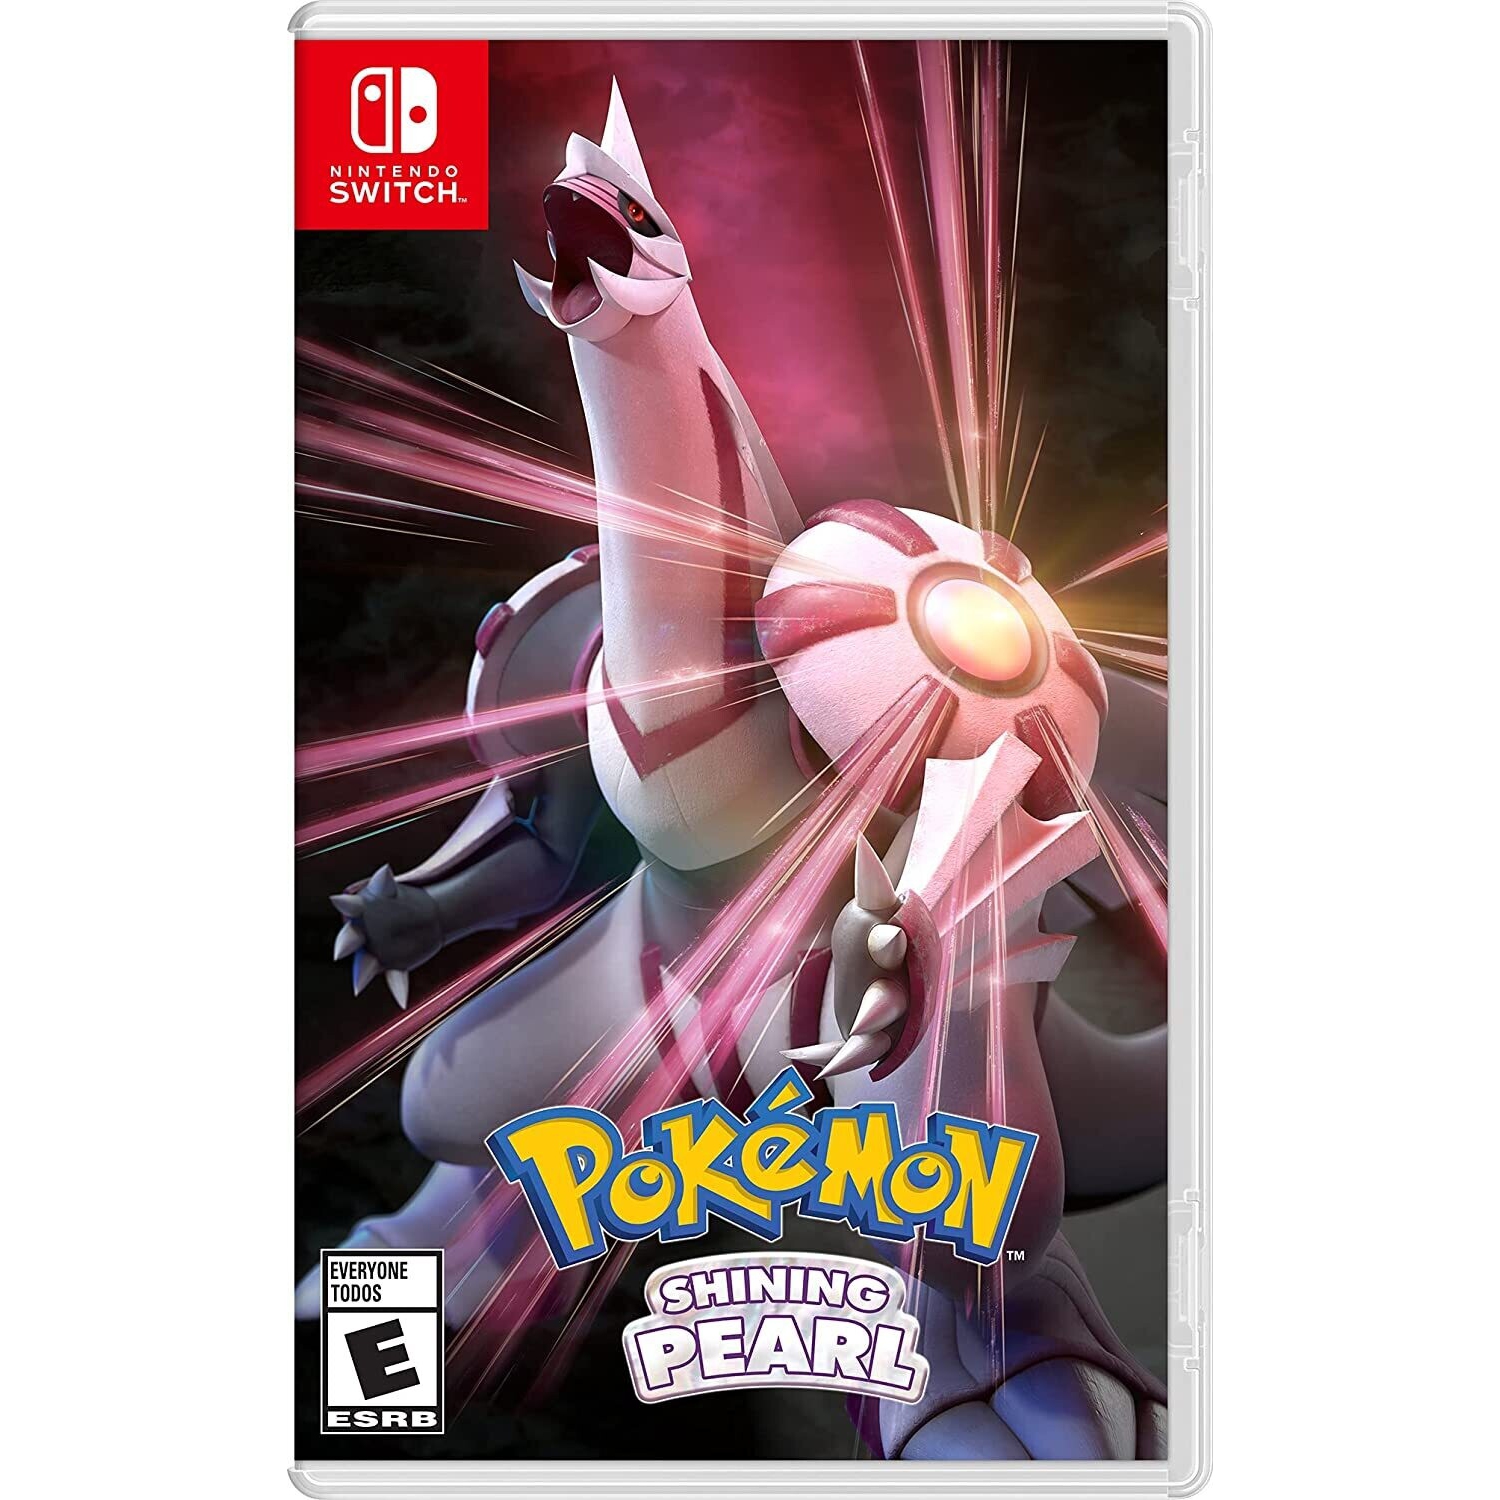 Pokemon Shining Pearl for Nintendo Switch [VIDEOGAMES]